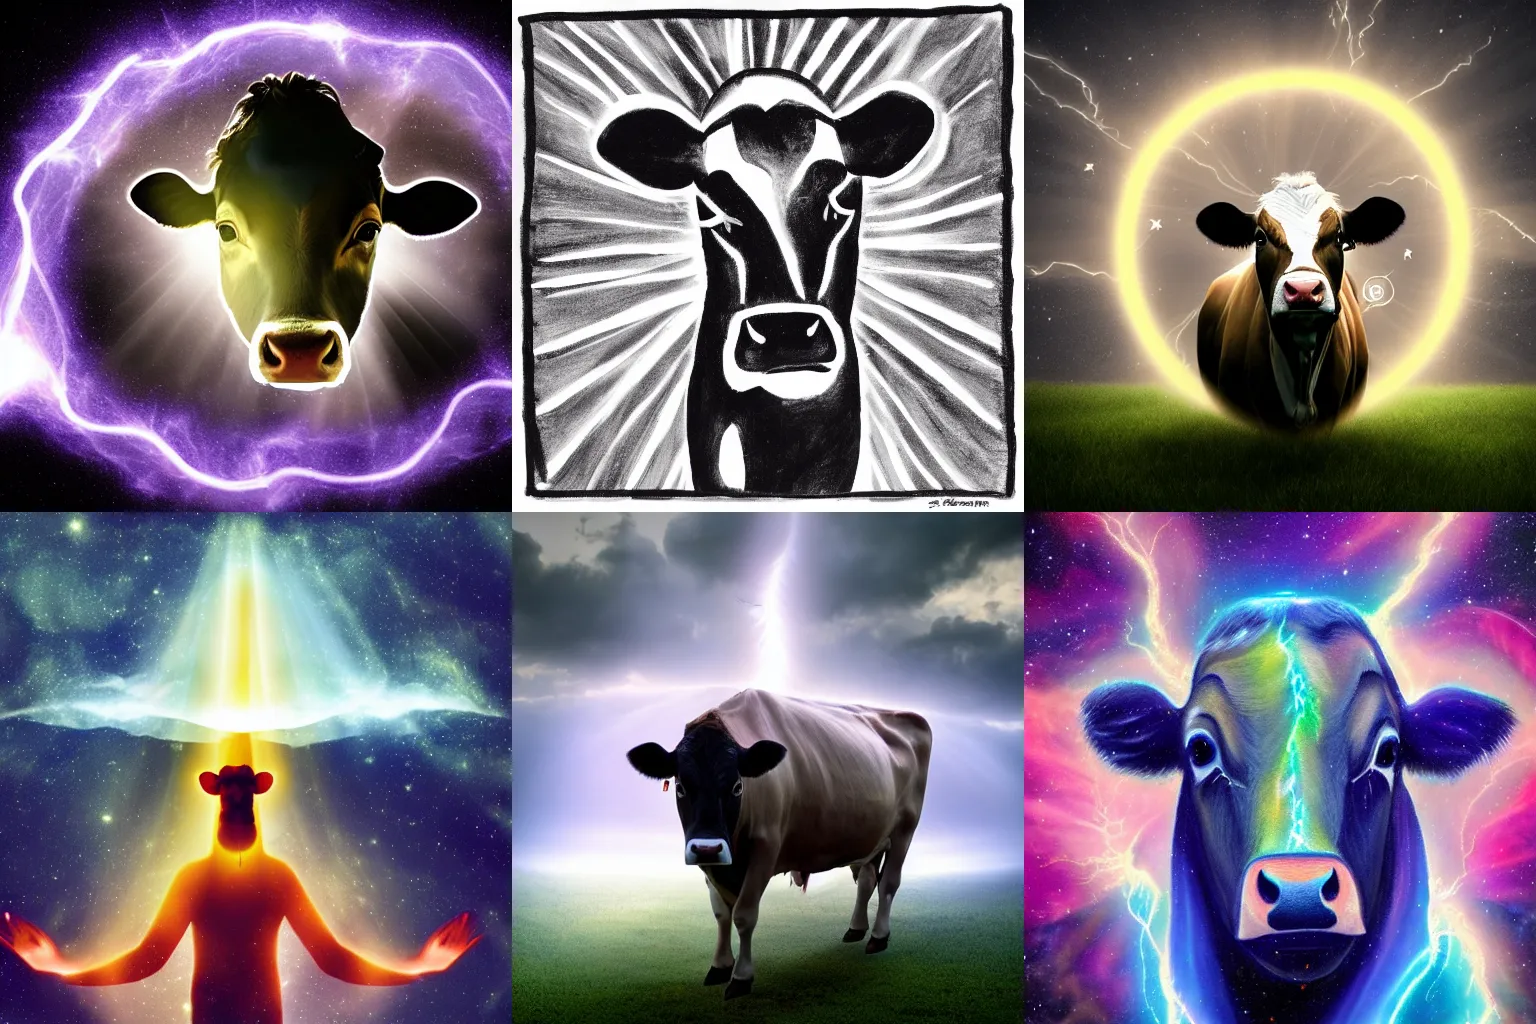 Prompt: cow, religious, halo, glowing, spiritual, transcendental, galaxy, lightning, fog, dramatic, god rays